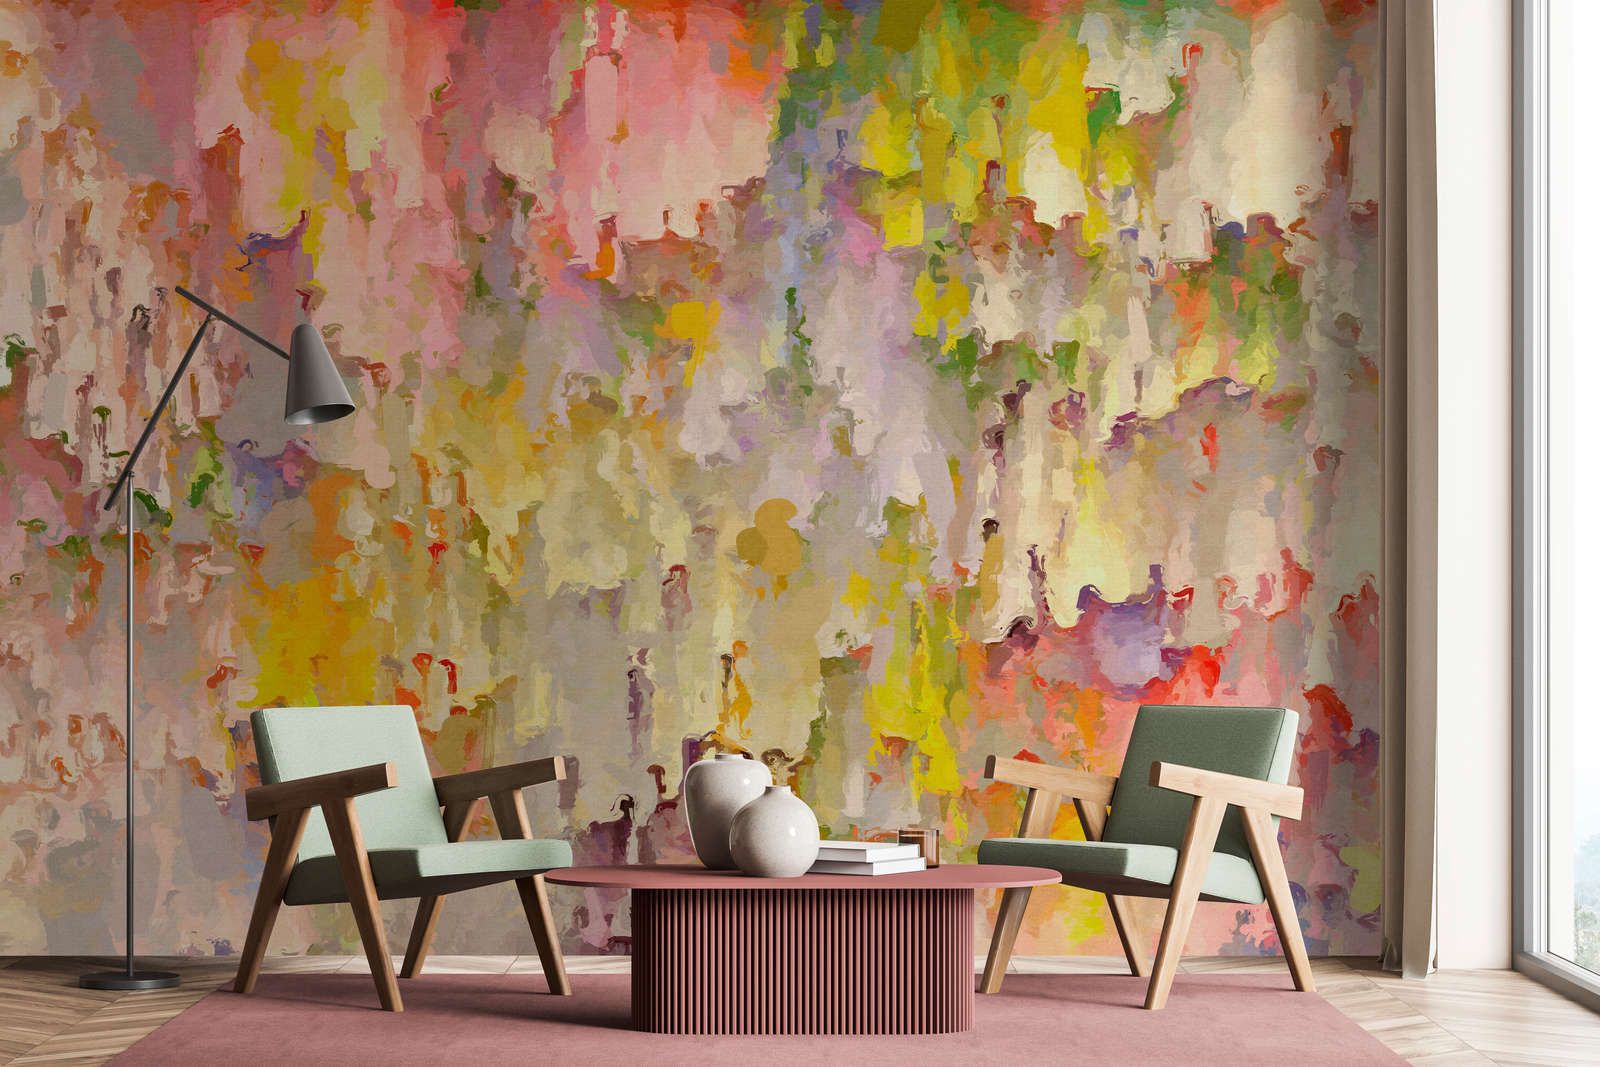             Photo wallpaper »opulea« - Watercolour design with linen texture, colour gradient - Colourful | Smooth, slightly shiny premium non-woven fabric
        